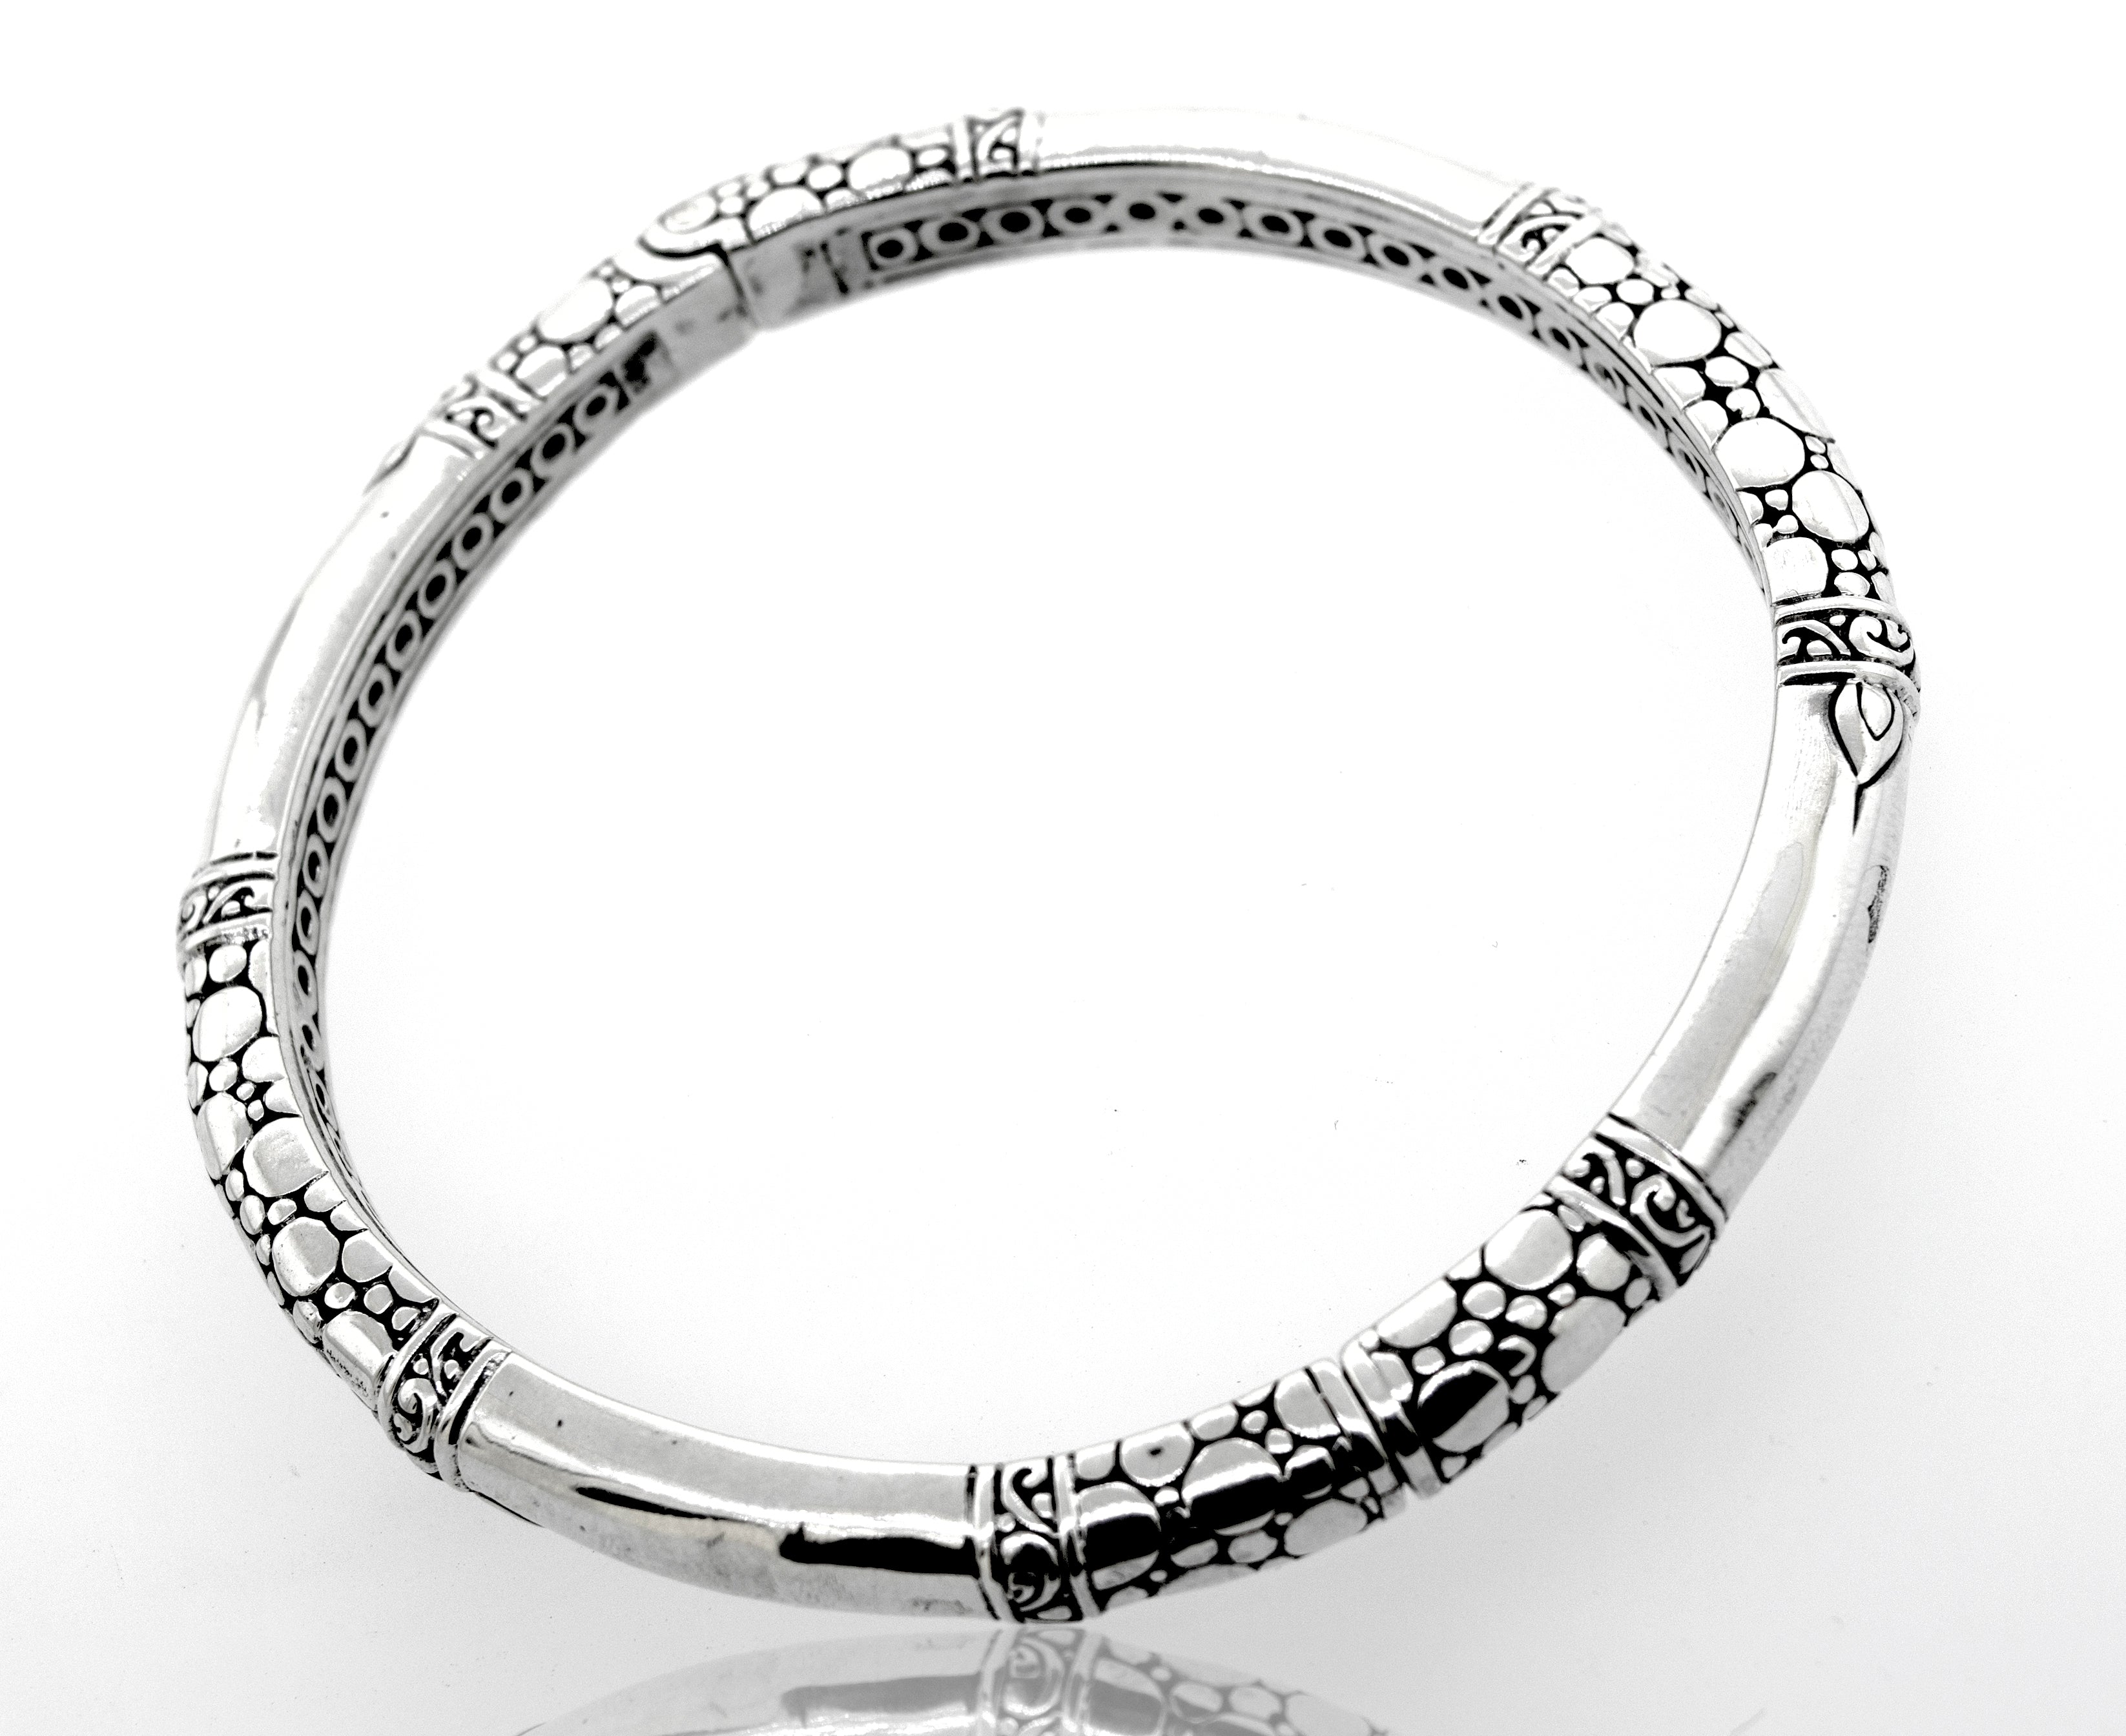 RIO GRANDE bracelet | Marisa Mason Jewelry